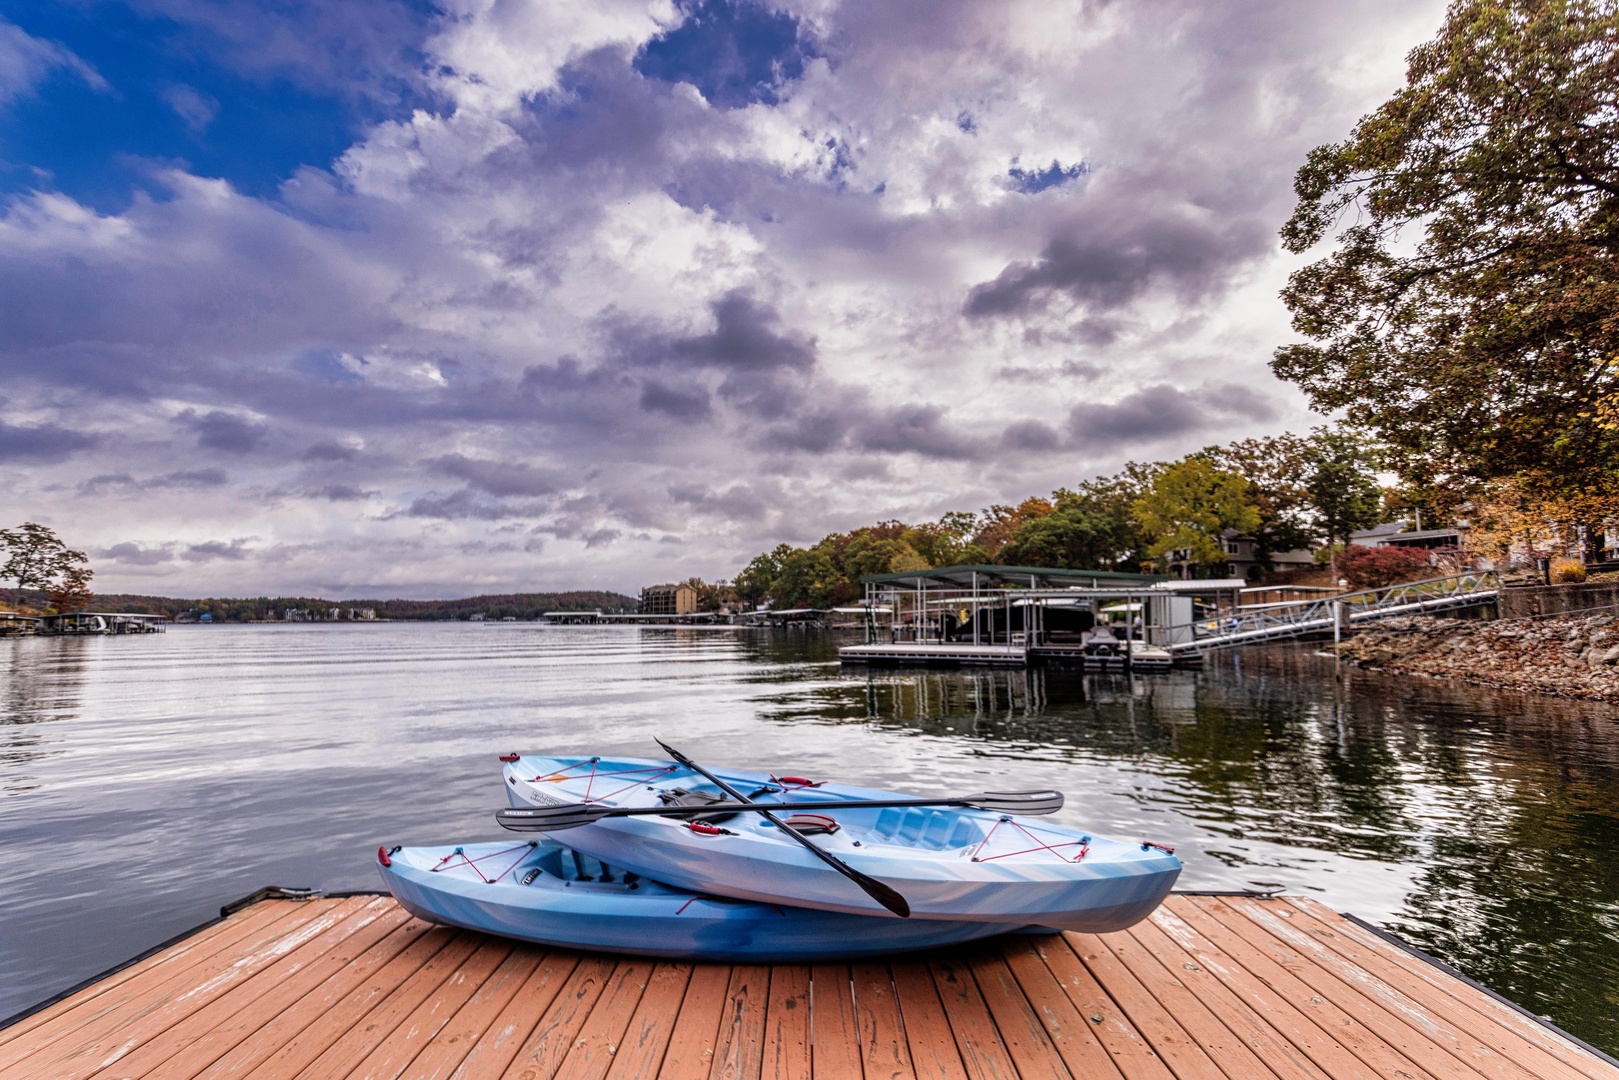 Grab a kayak & venture out onto the lake!